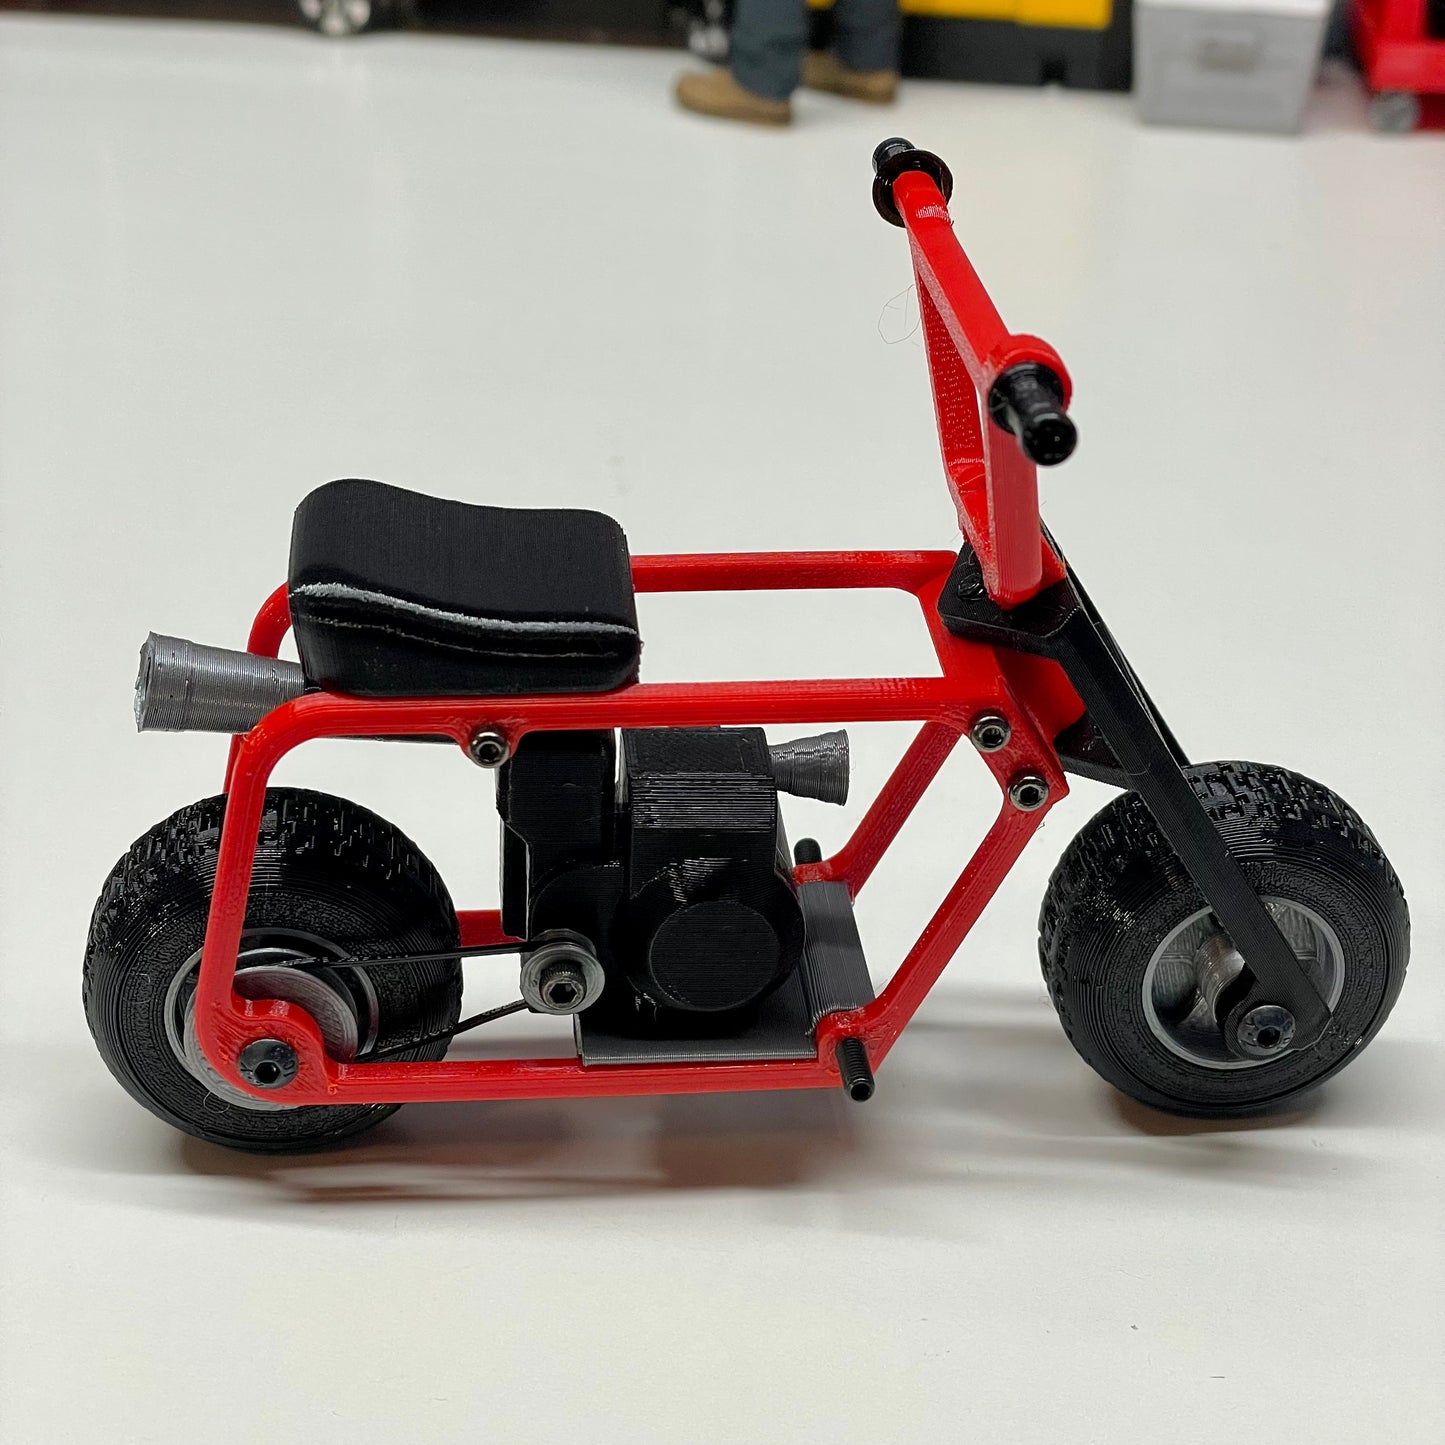 1/10 Scale “Doodle Bug” Mini Bike for your Scale Garage Diorama